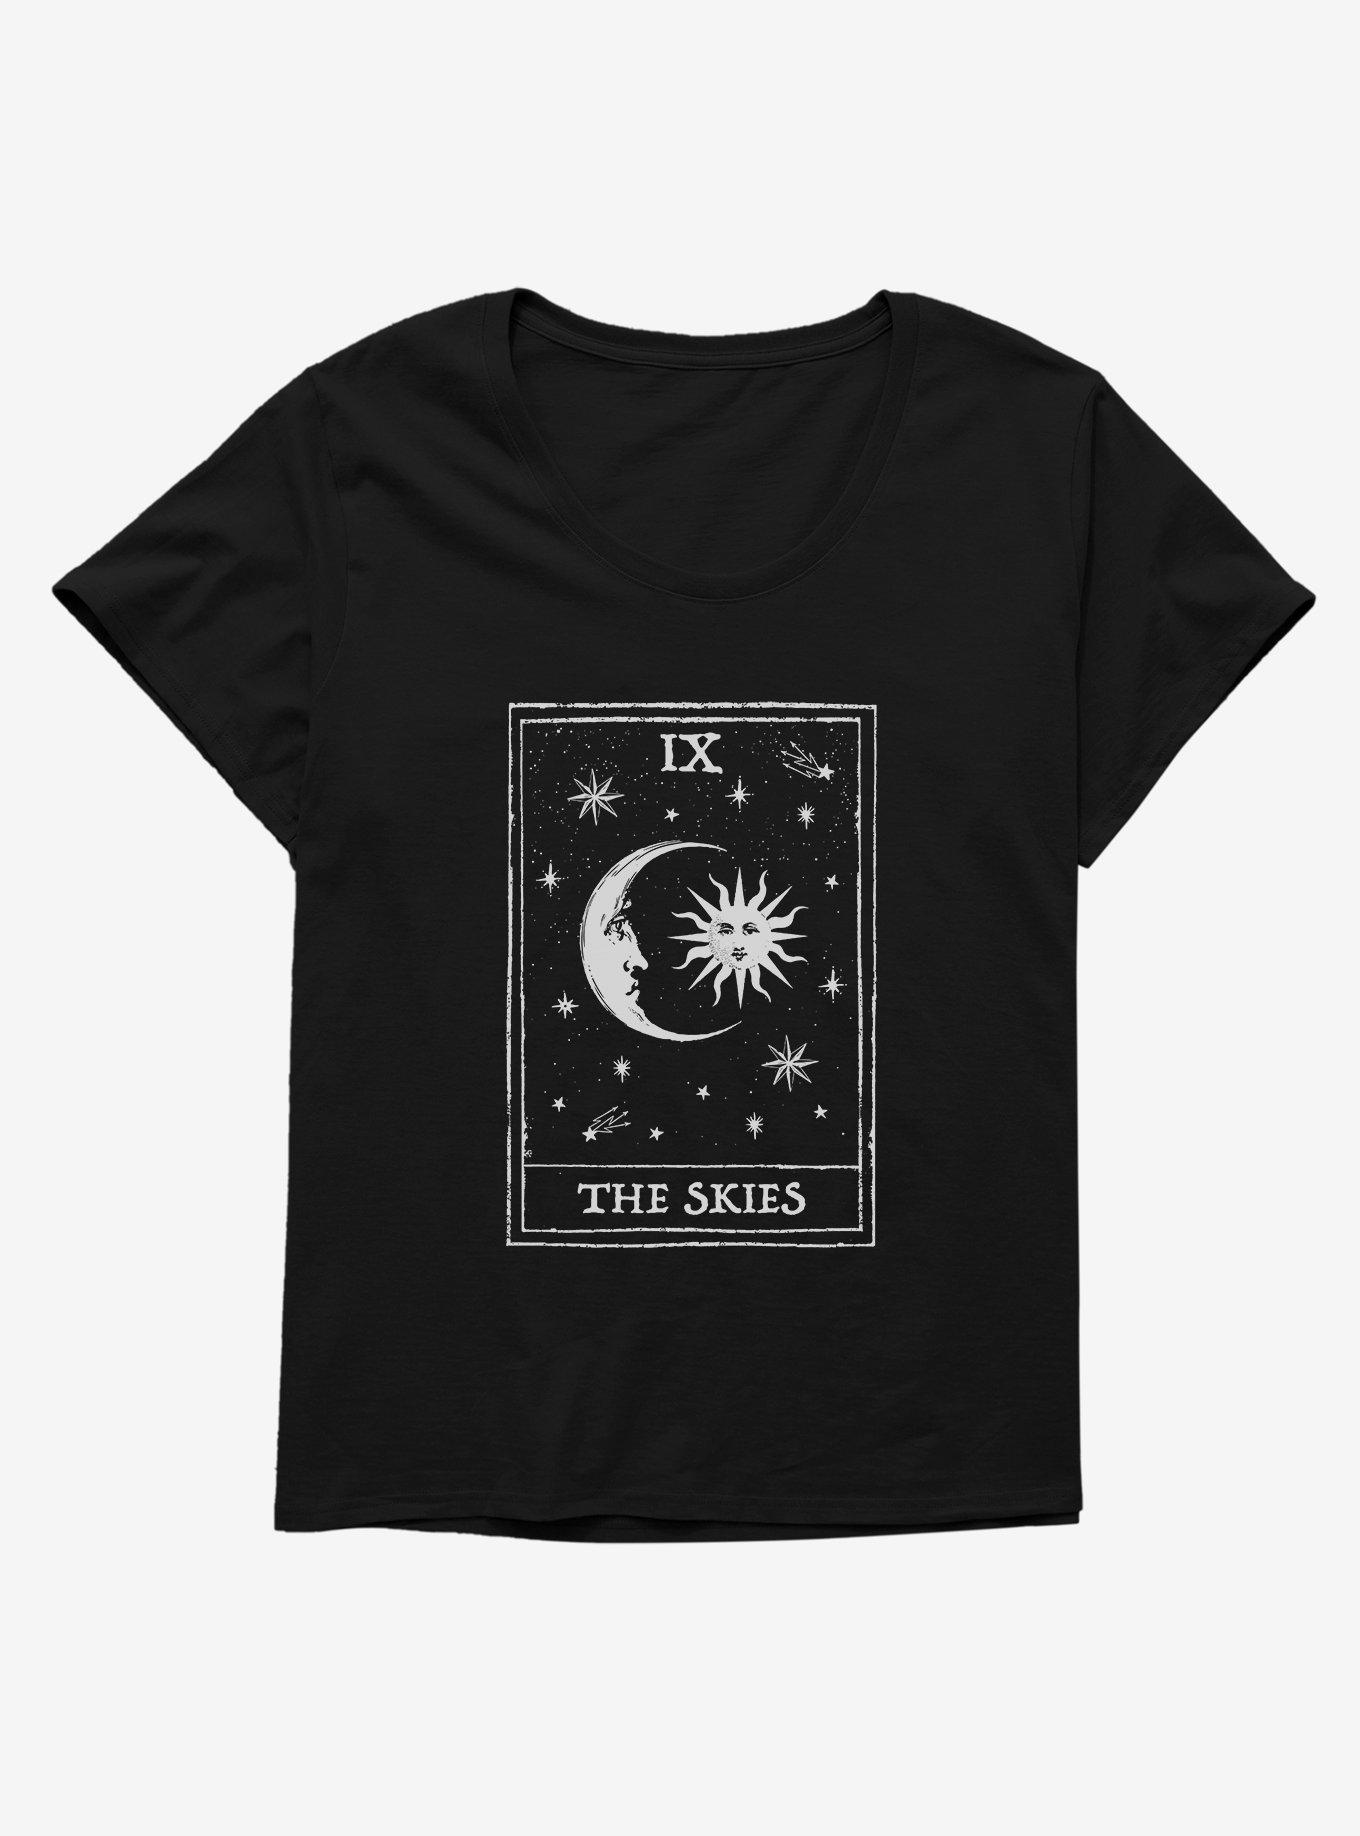 The Skies Sun And Moon Tarot Card Girls T-Shirt Plus